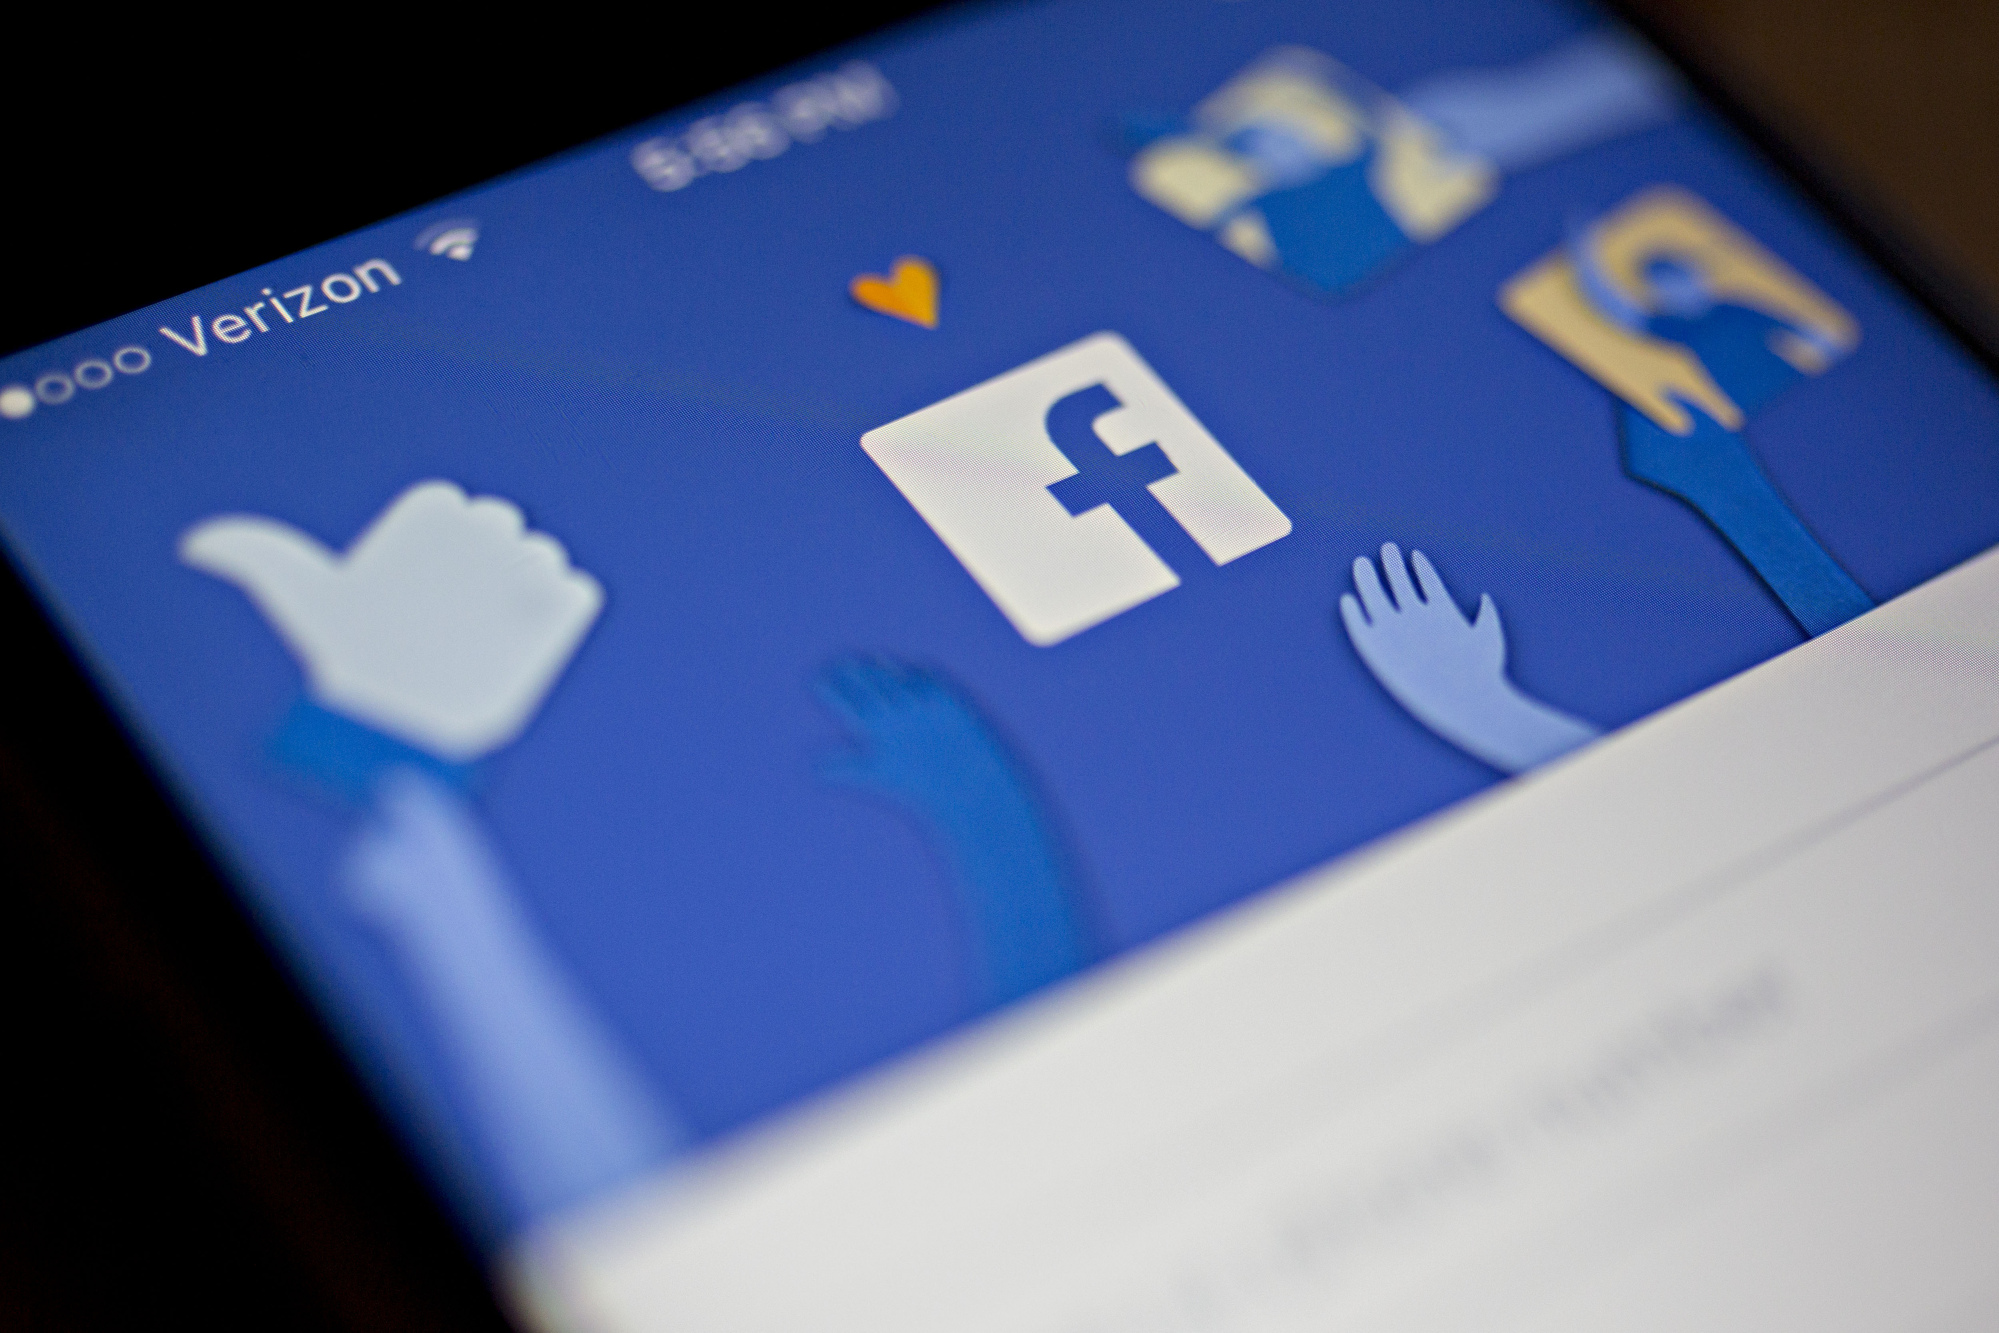 Facebook App And Logo As Crisis Reignites Washington Scrutiny Of Social Networks 